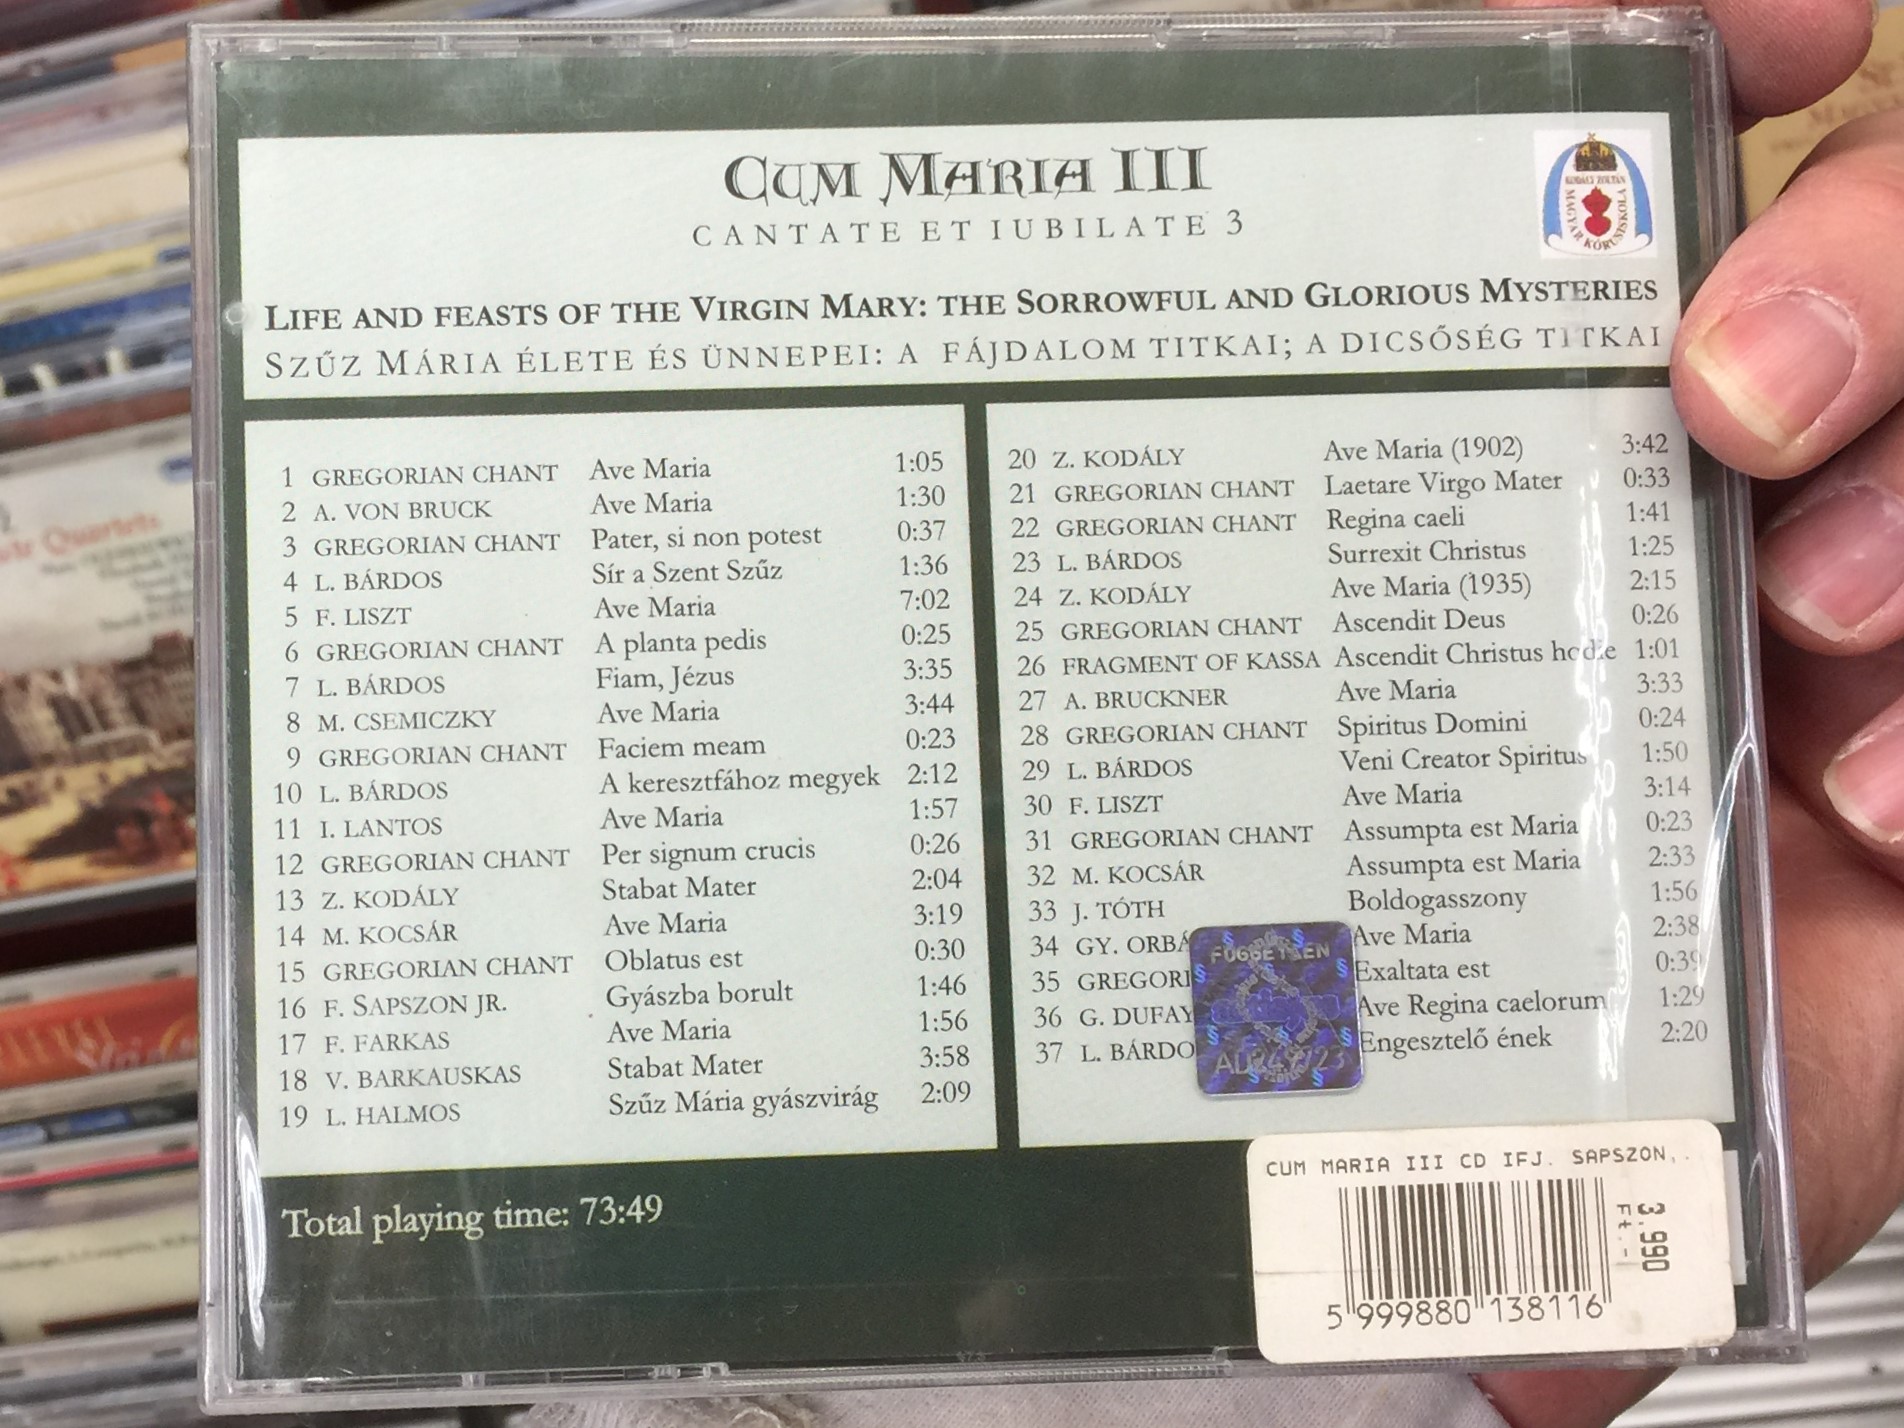 cum-maria-iii.-cantate-mixed-choir-jubilate-girls-chor-hungary-conducted-by-sapszon-ferenc-jr.-kod-ly-zolt-n-magyar-k-rusiskola-audio-cd-2005-kzmk-cd-09-2-.jpg